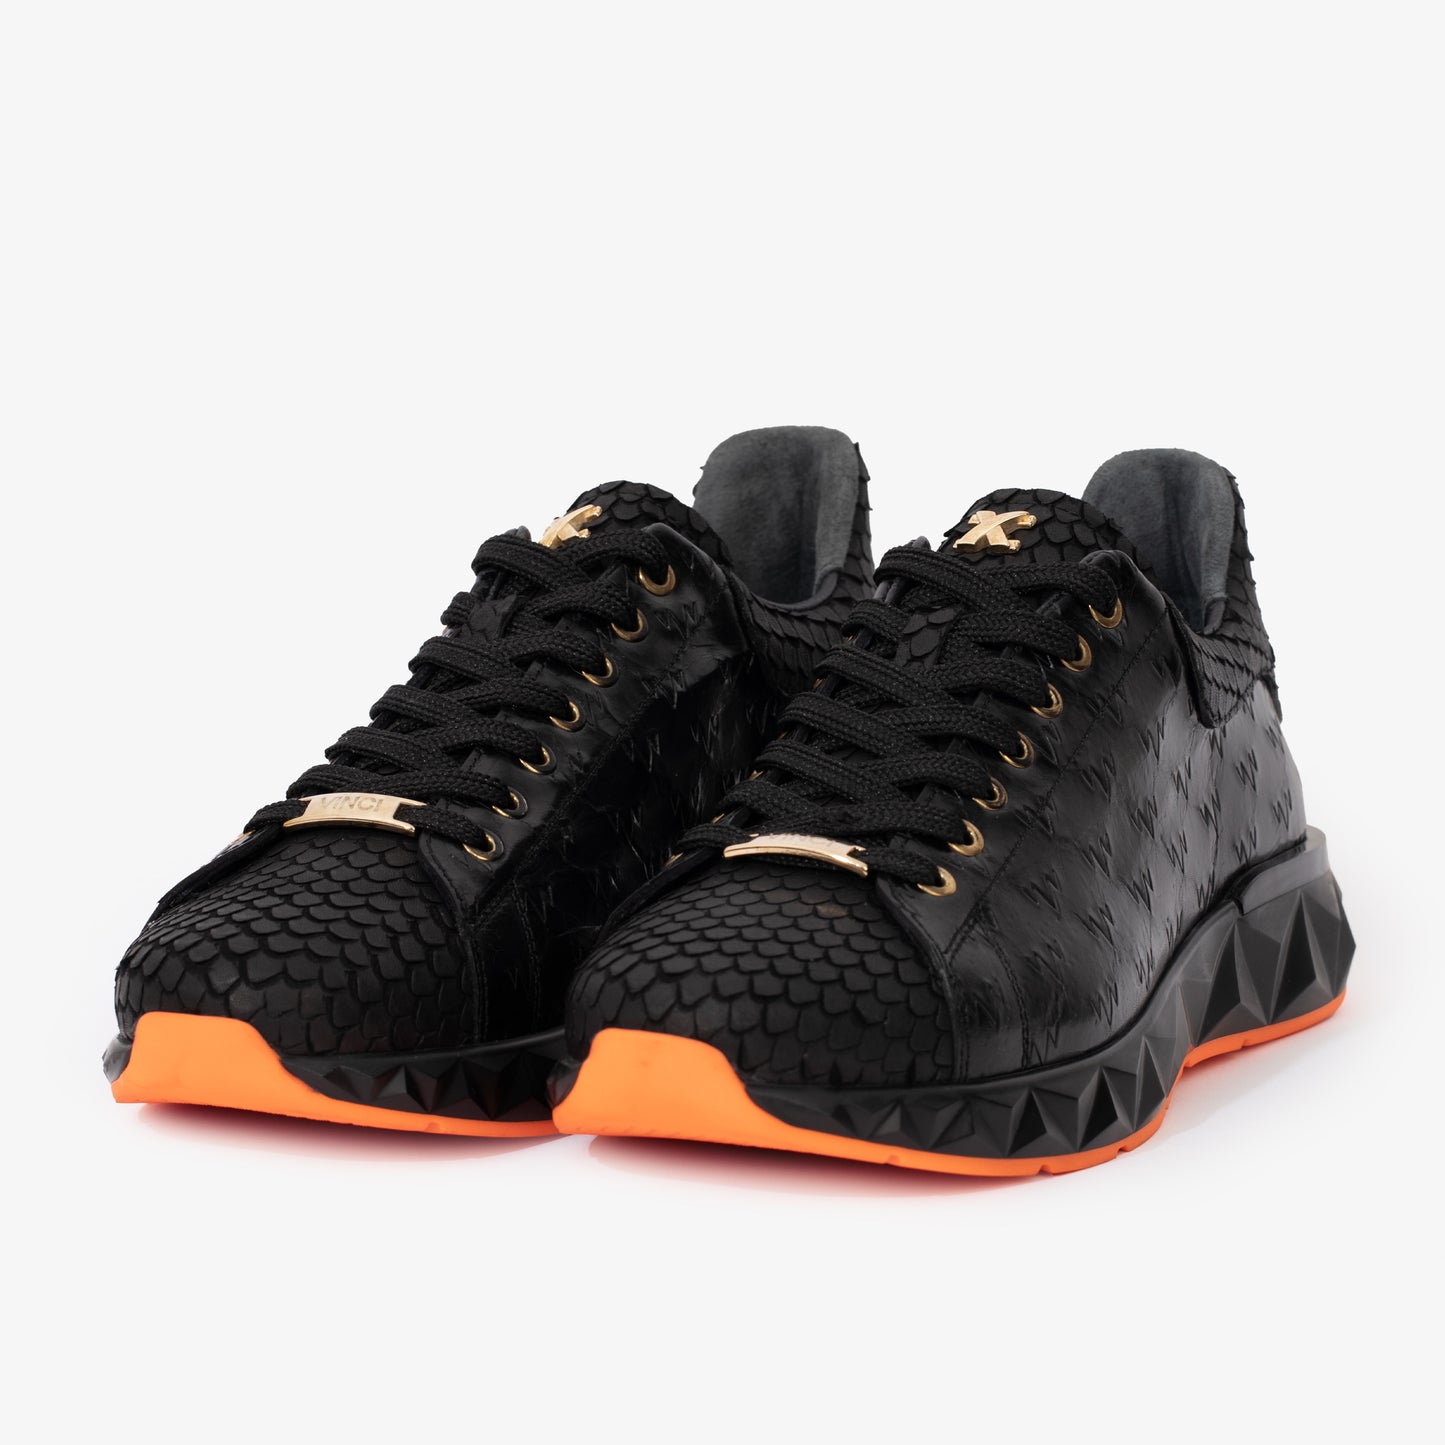 The Caesars Black Leather  Men Sneaker